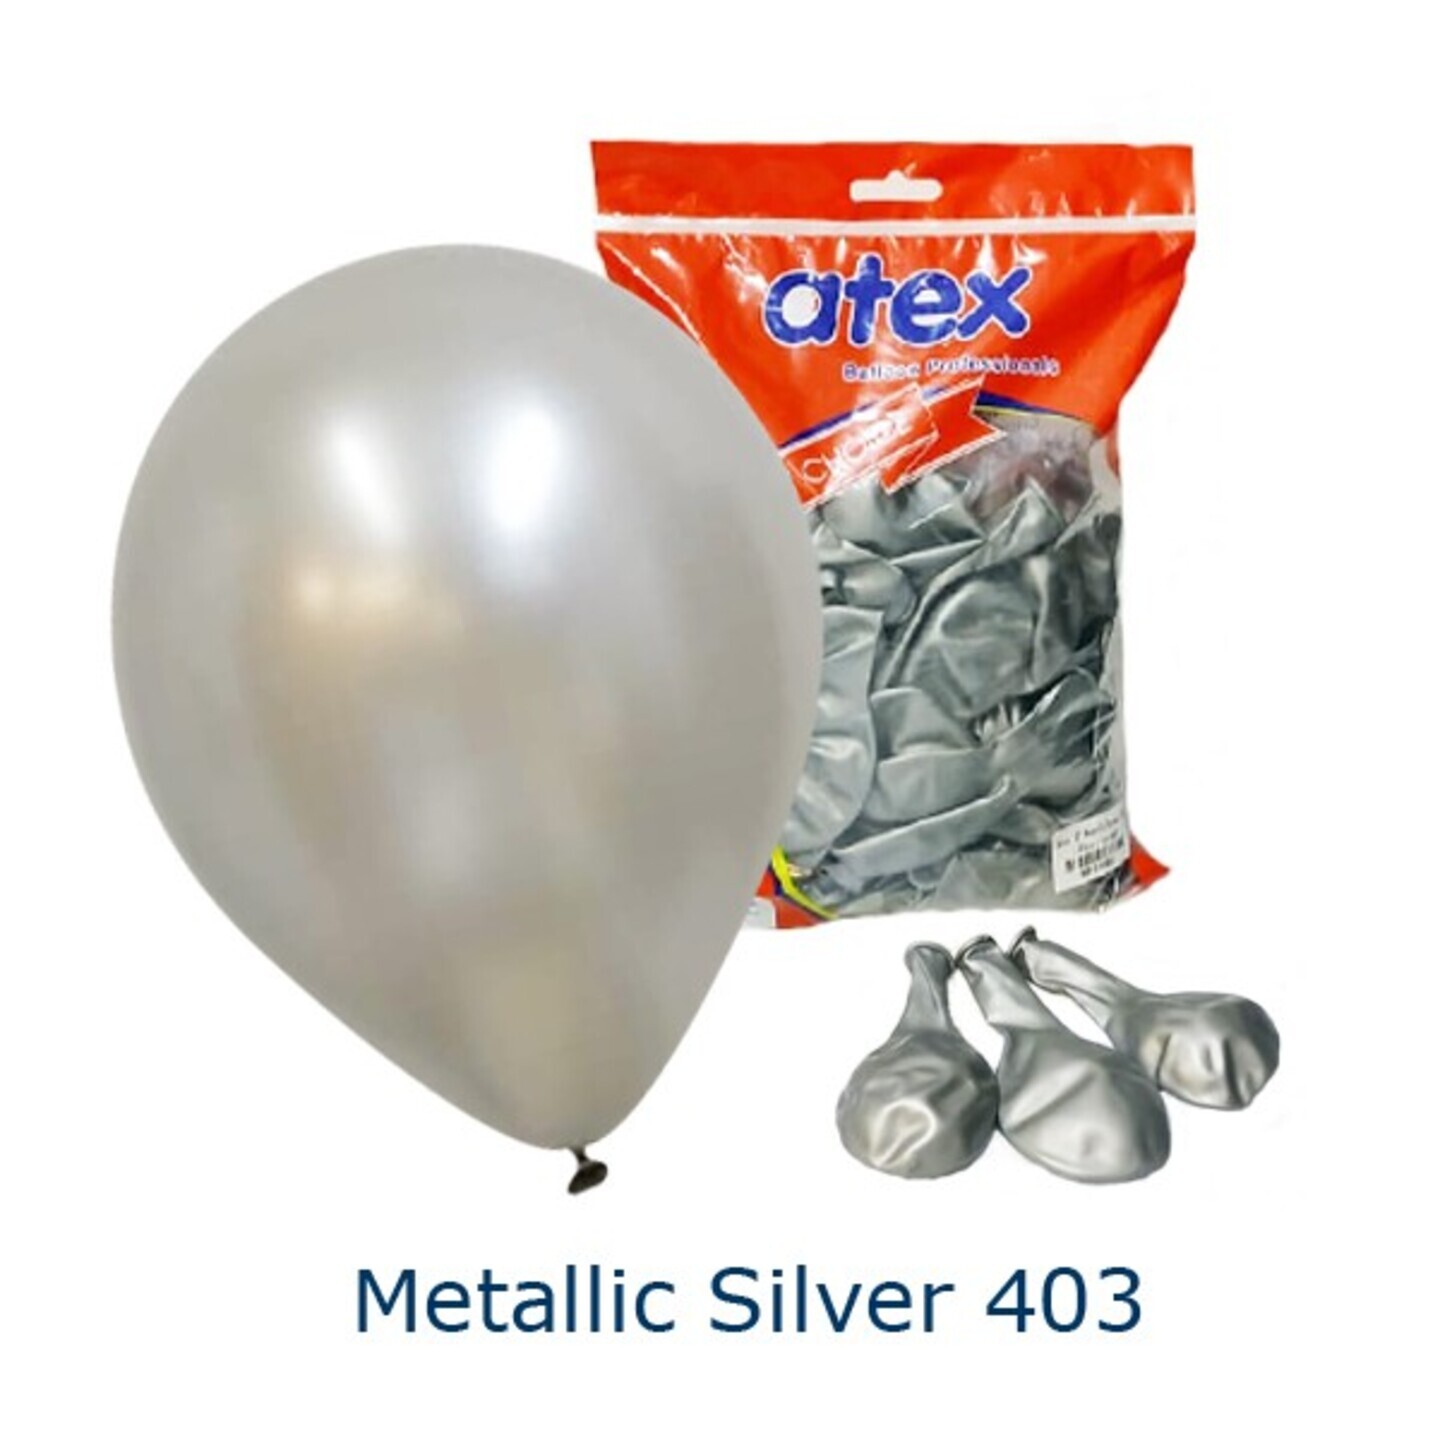 Metallic Silver 403